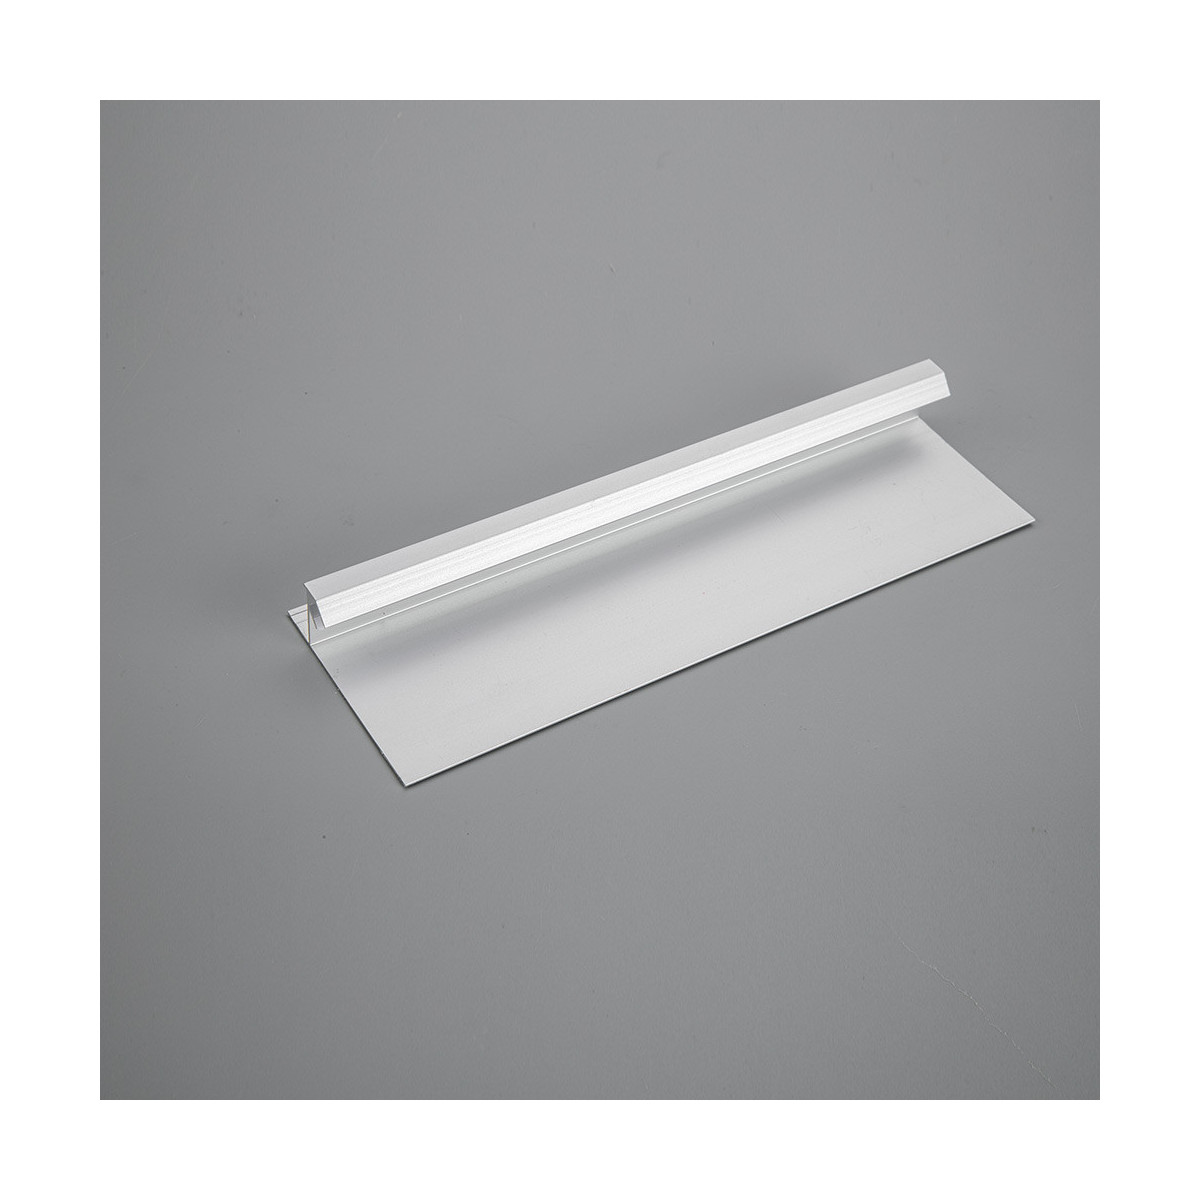 Perfil de alumínio fita led branca 2m para tomada - luz indireta